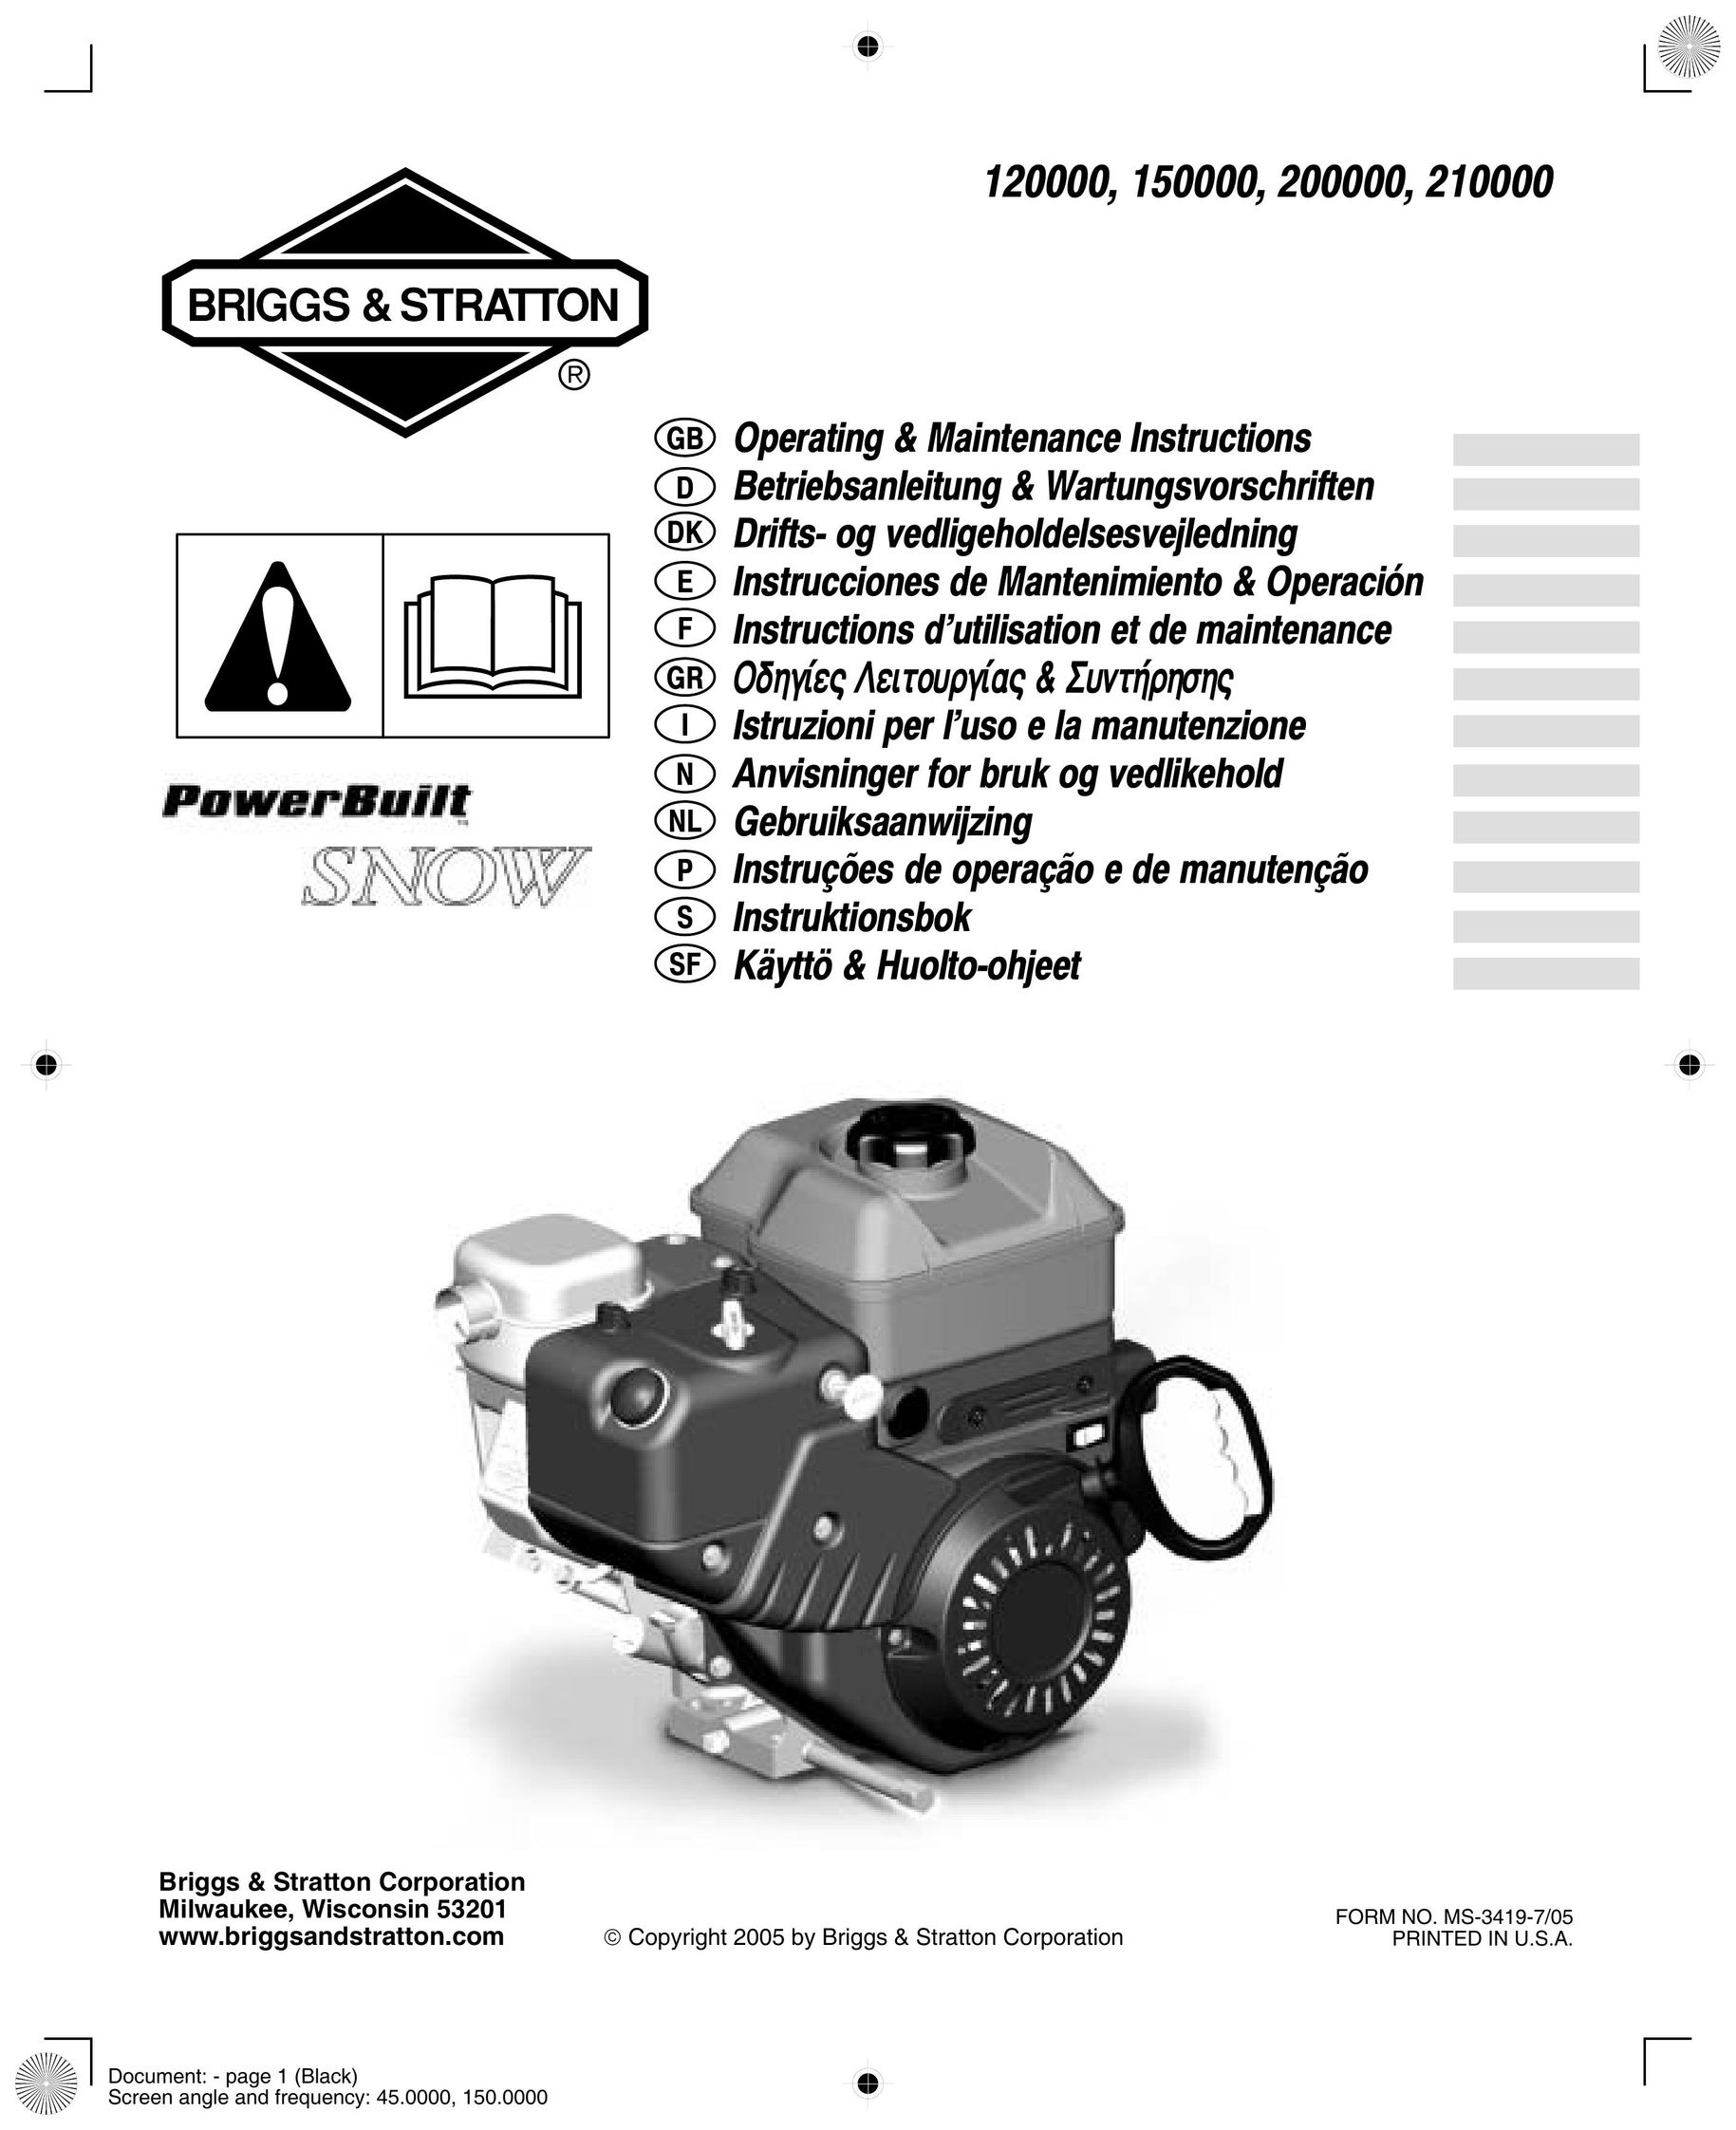 Briggs & Stratton 200000 Car Video System User Manual